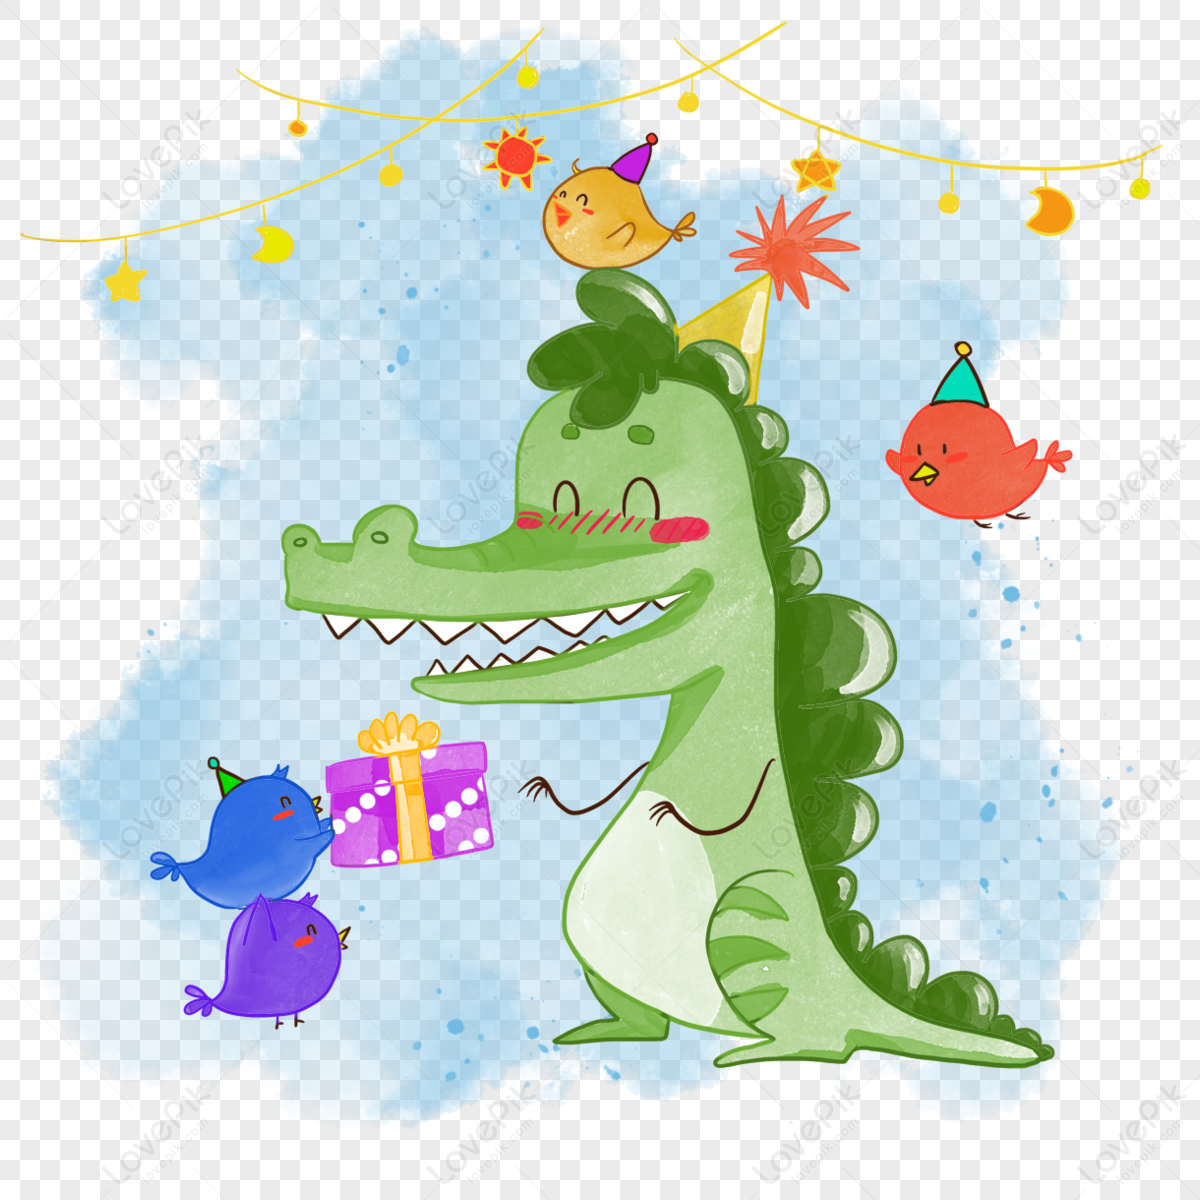 Watercolor cartoon animal crocodile with bird animals pass birthday,anime,gift png image free download